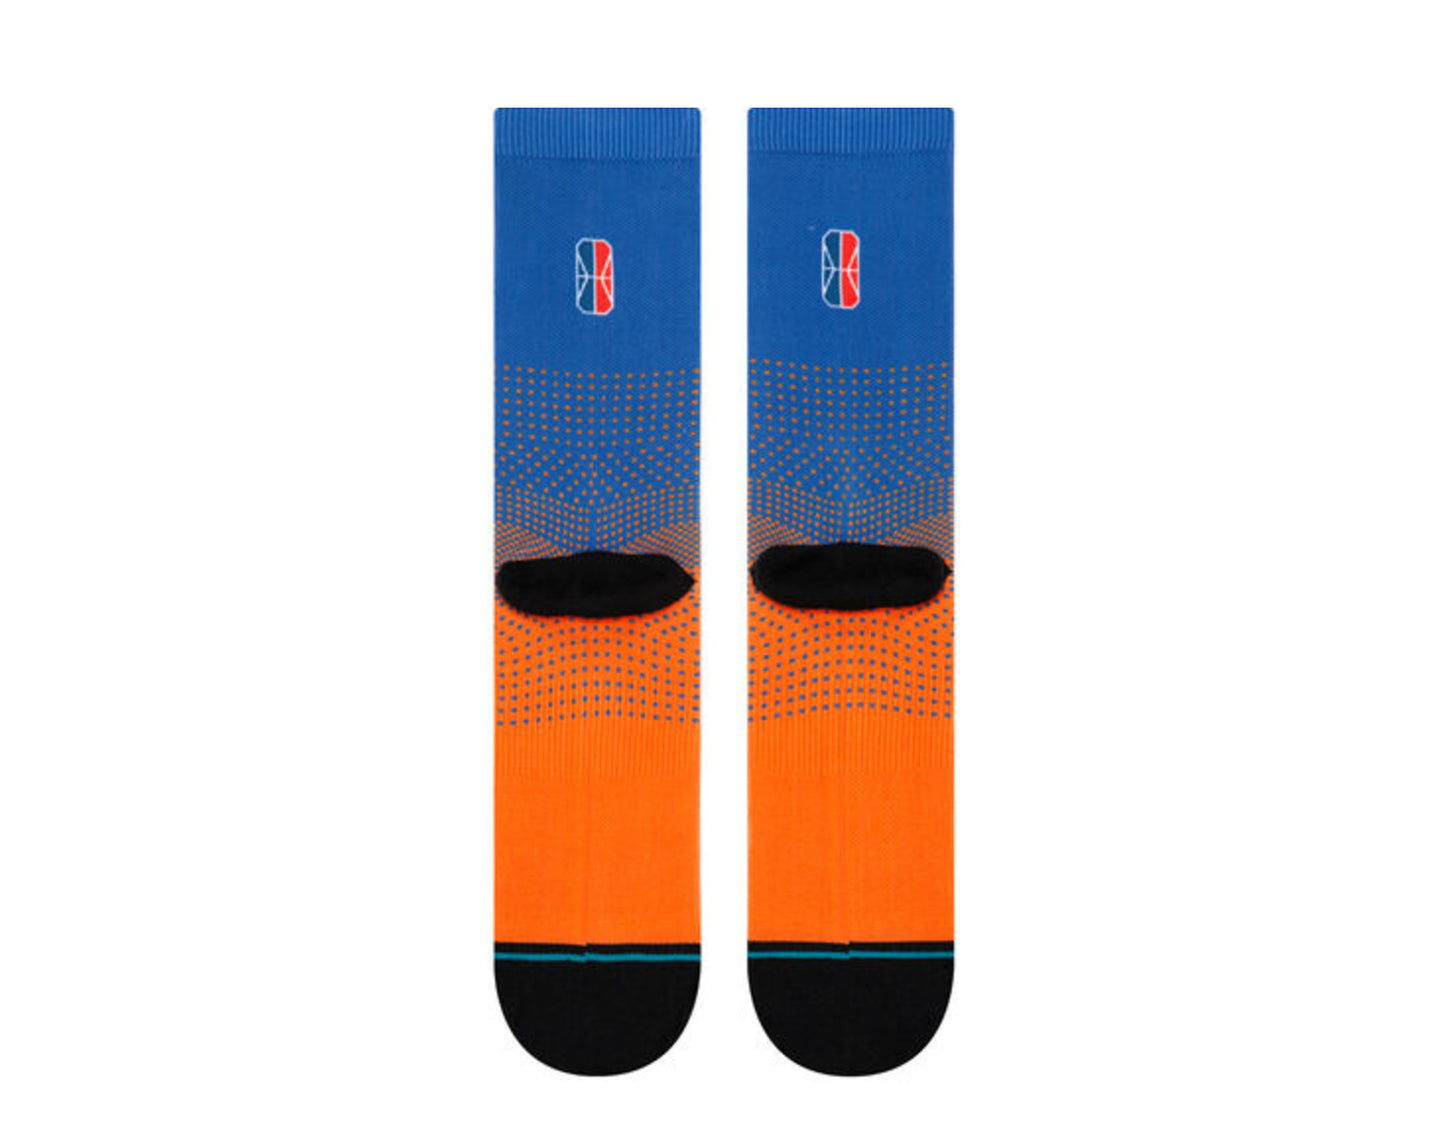 Stance Casual NBA NY Knicks Gaming 2K Blue/Orange Crew Socks M558A19KNG-BLU